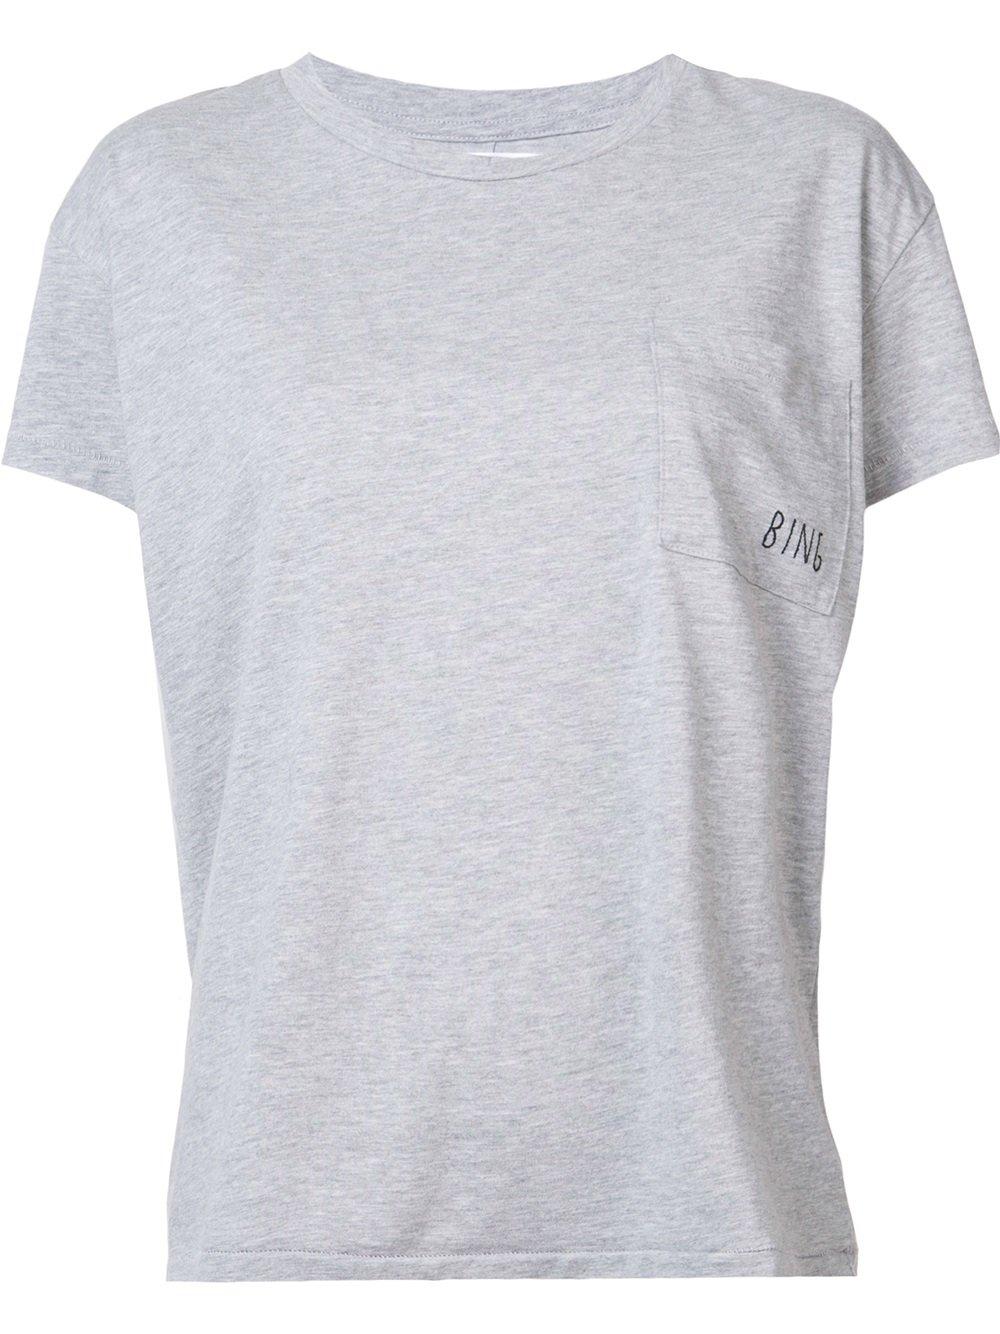 Lyst - Anine Bing Chest Pocket T-shirt in Gray